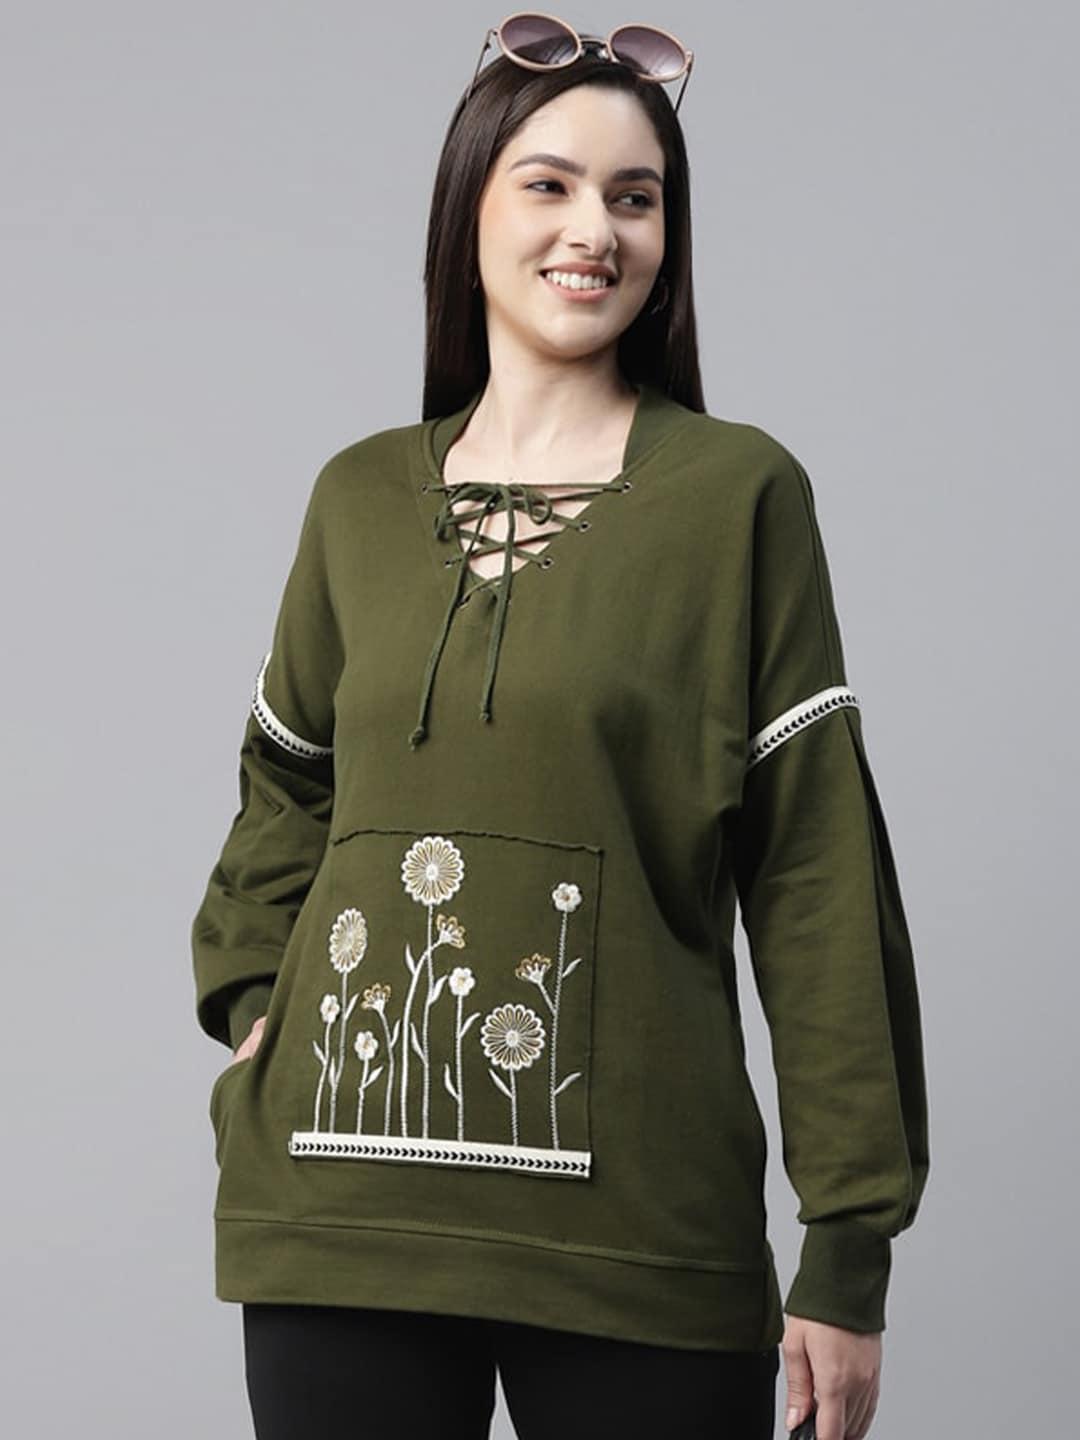 taurus-women-olive-green-embroidered-sweatshirt